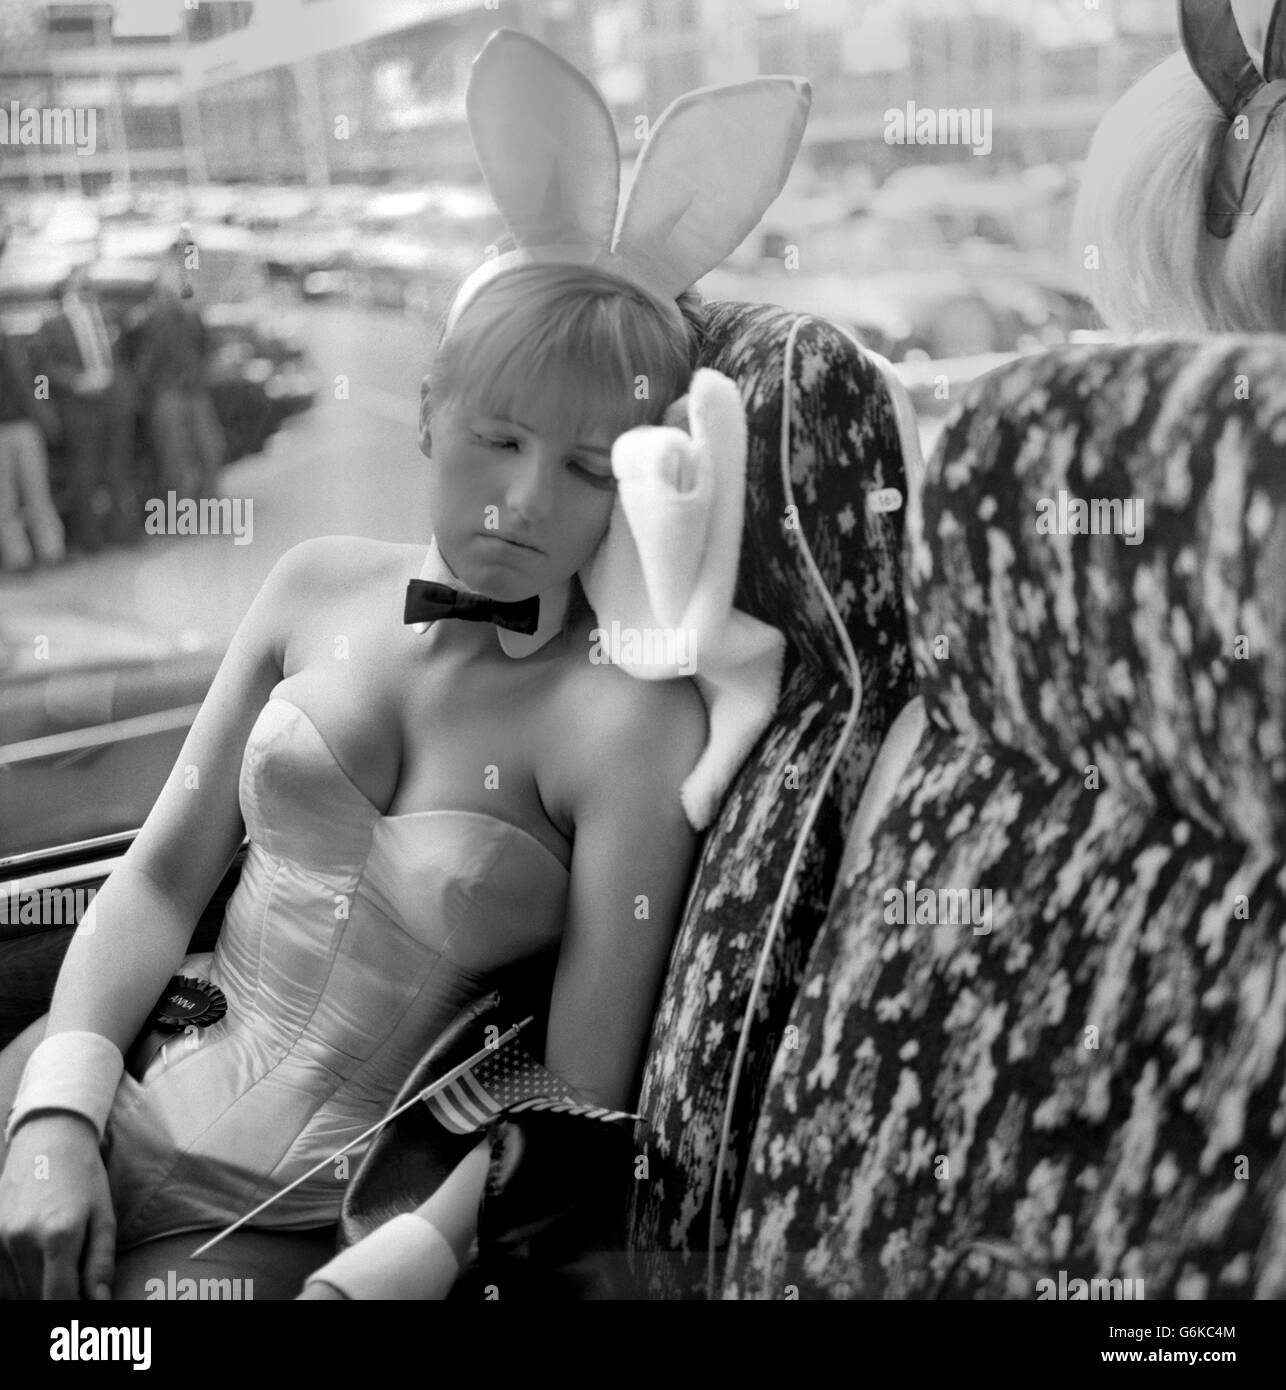 Entertainment - Playboy Bunny - London Stock Photo